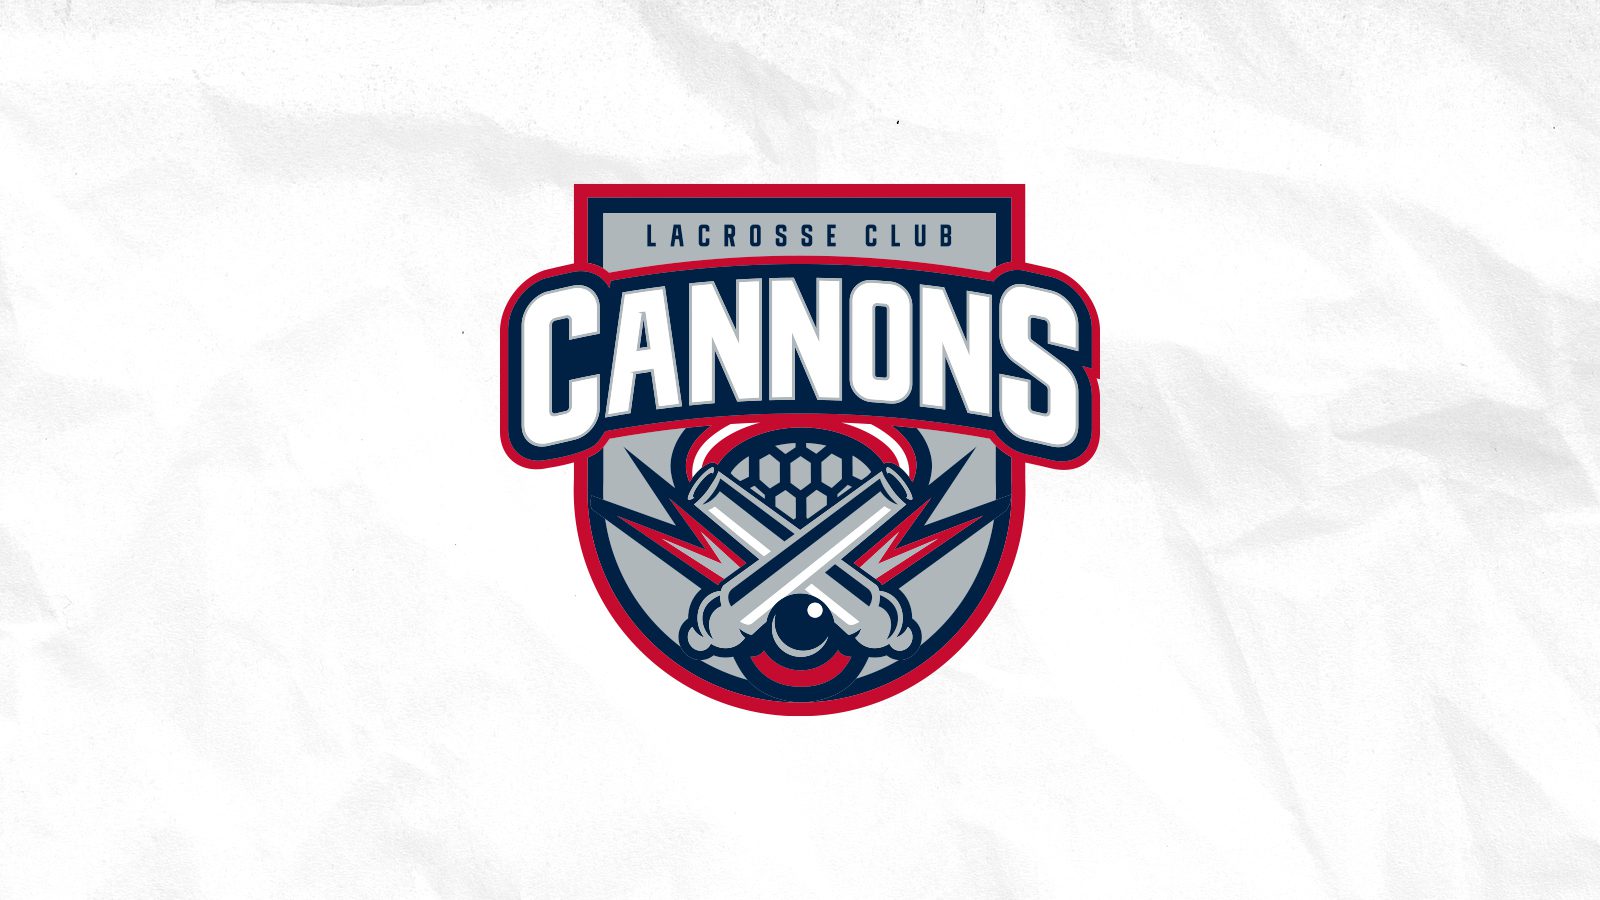 Premier Lacrosse League Relaunch Boston Cannons As Cannons Lacrosse Club -  Premier Lacrosse League